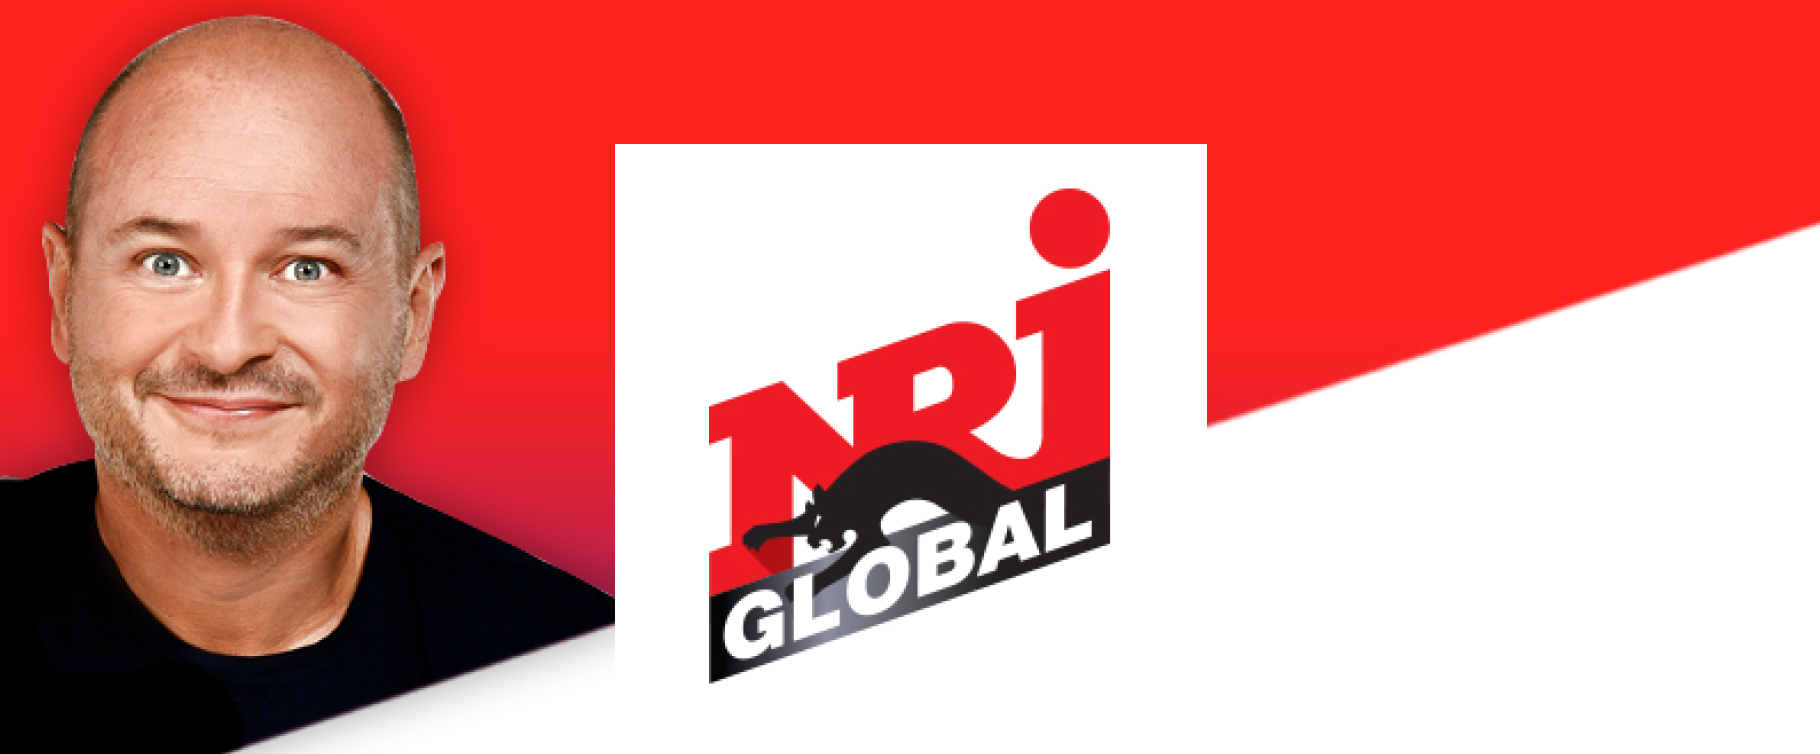 NRJ Global intègre la chaîne YouTube de Cauet